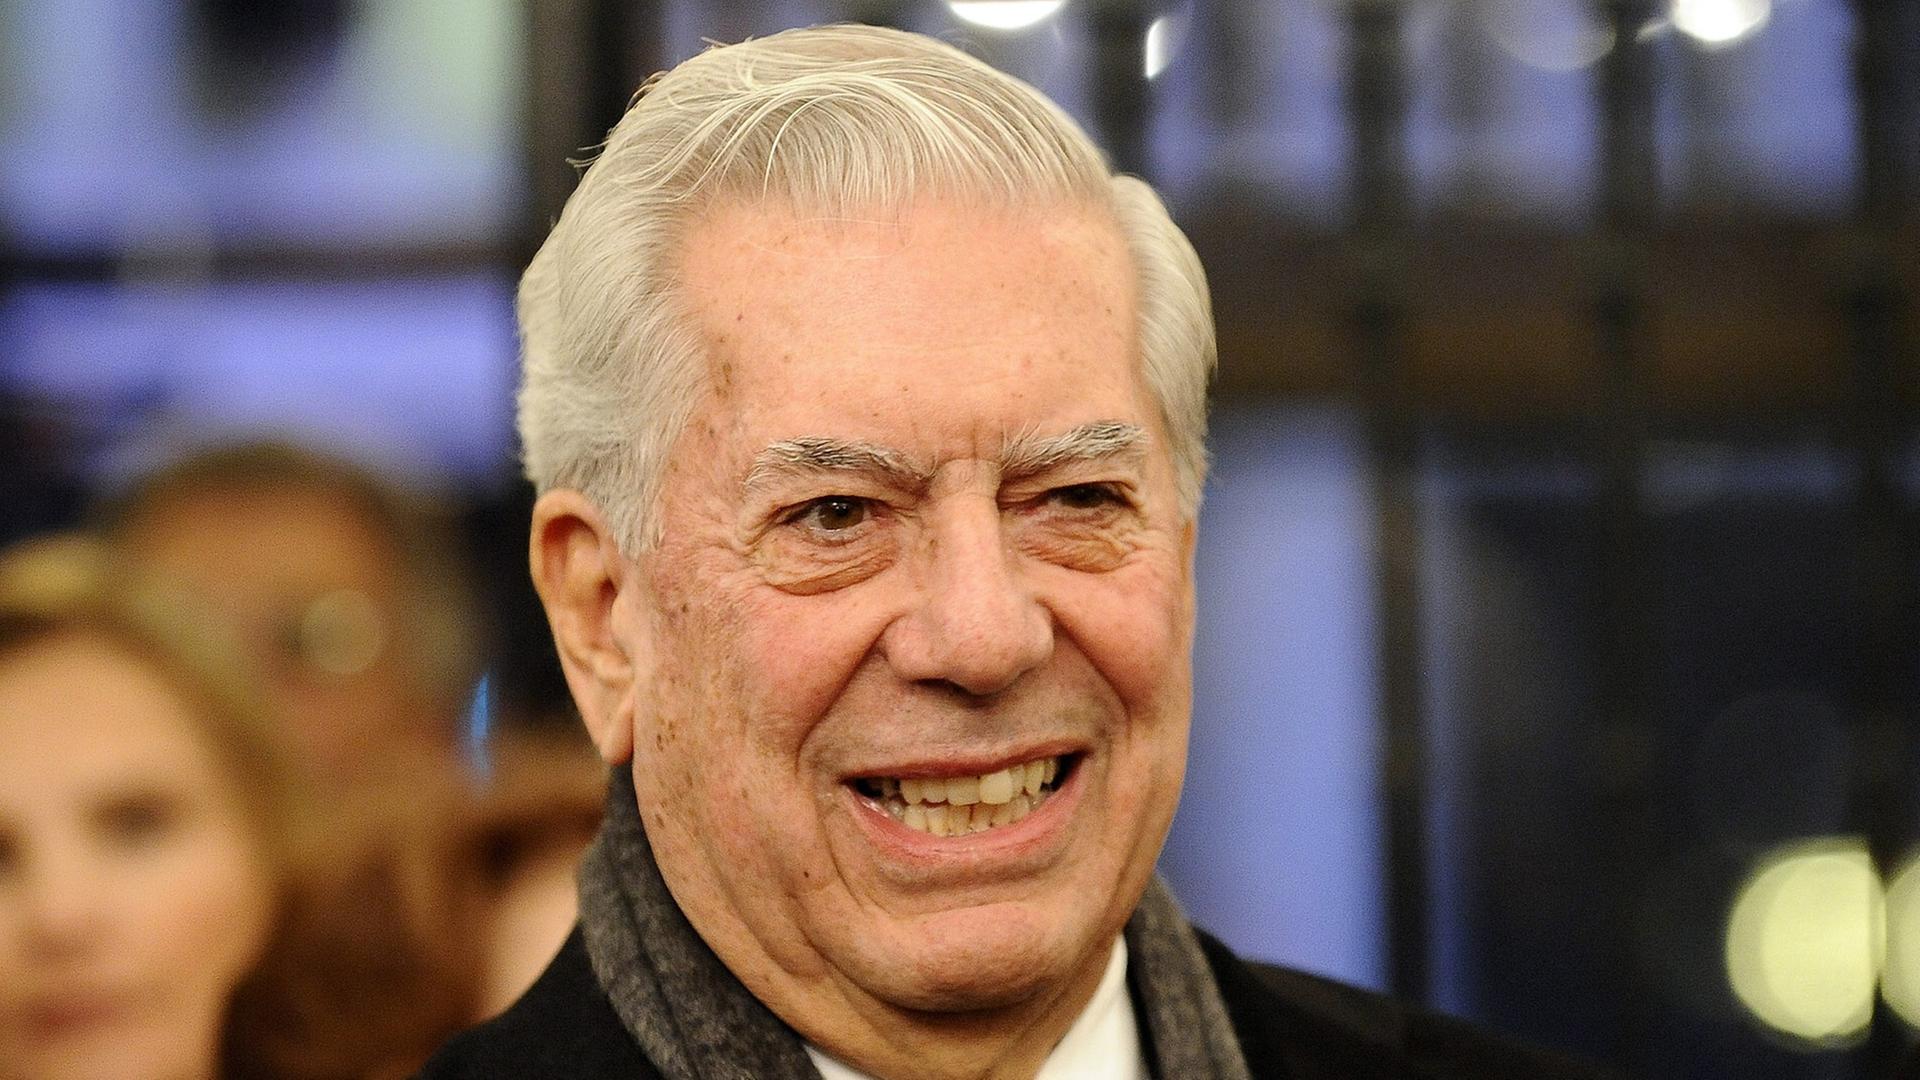 Der Autor und Nobelpreisträger Mario Vargas Llosa